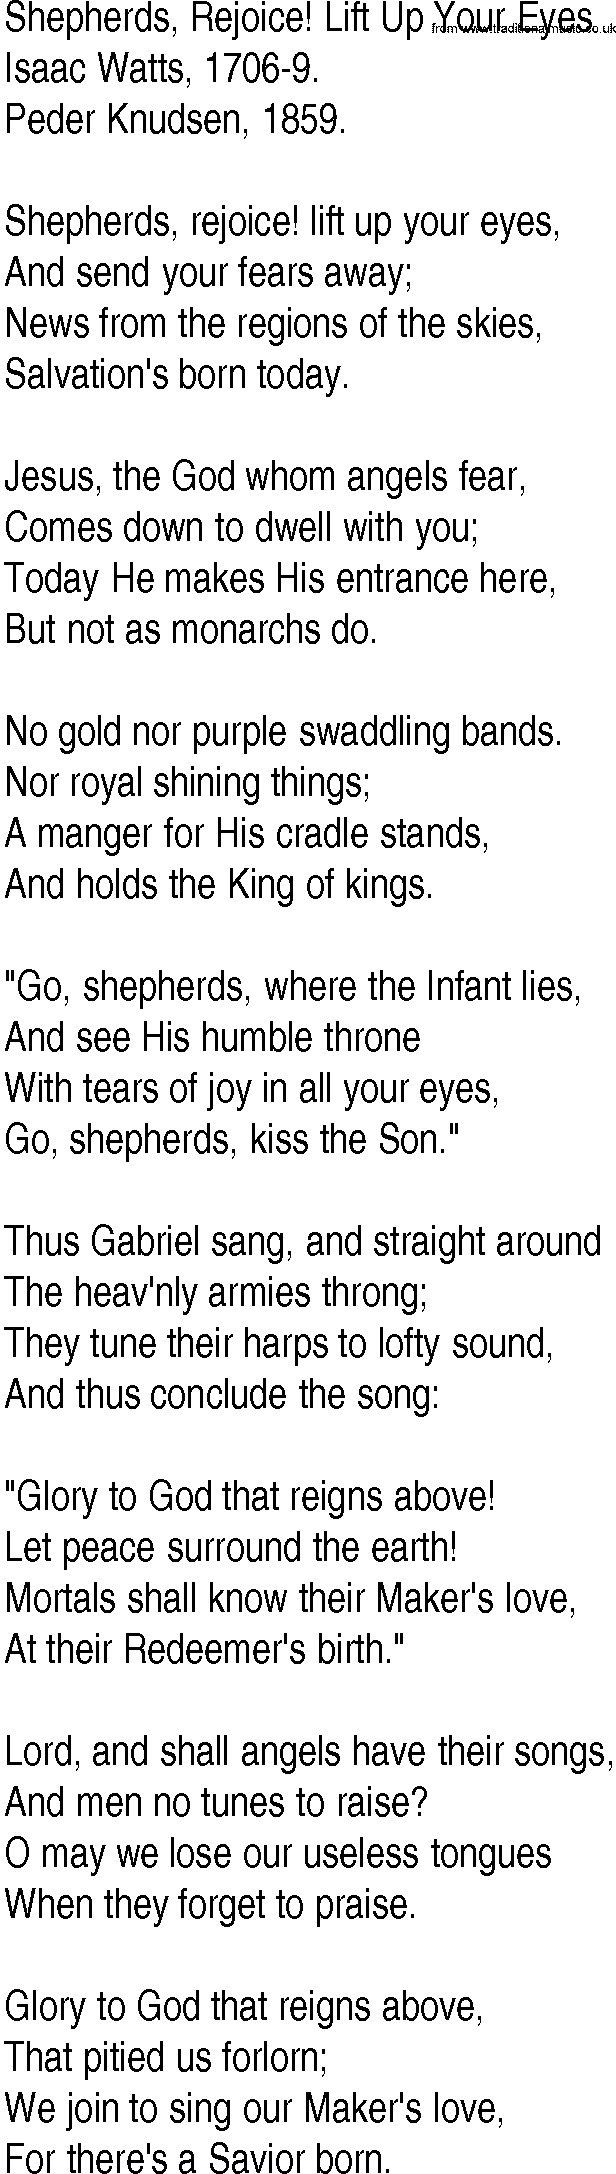 Hymn and Gospel Song: Shepherds, Rejoice! Lift Up Your Eyes by Isaac Watts lyrics